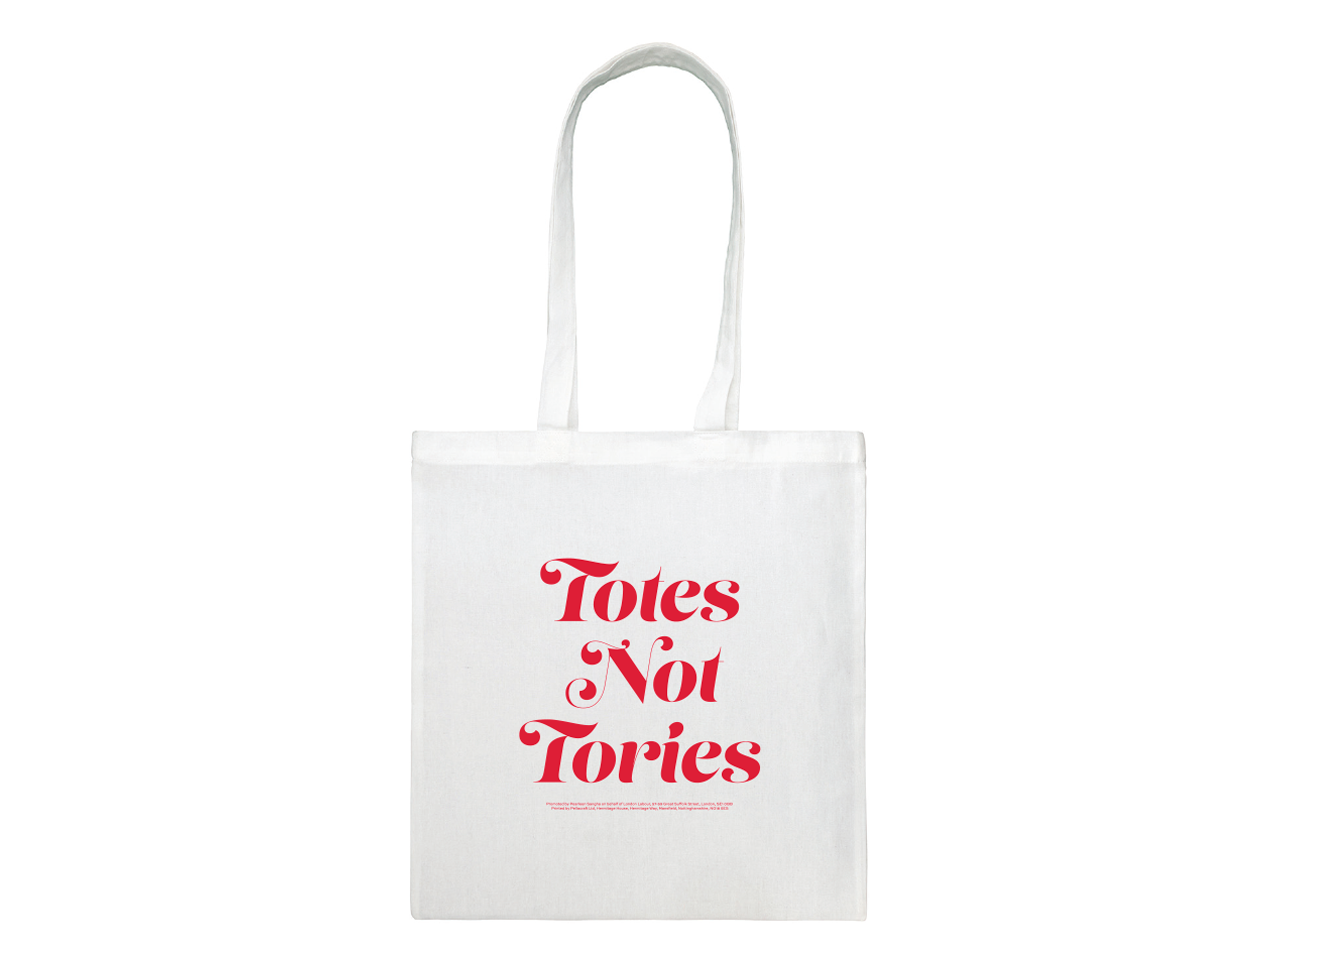 Totes not Tories bag